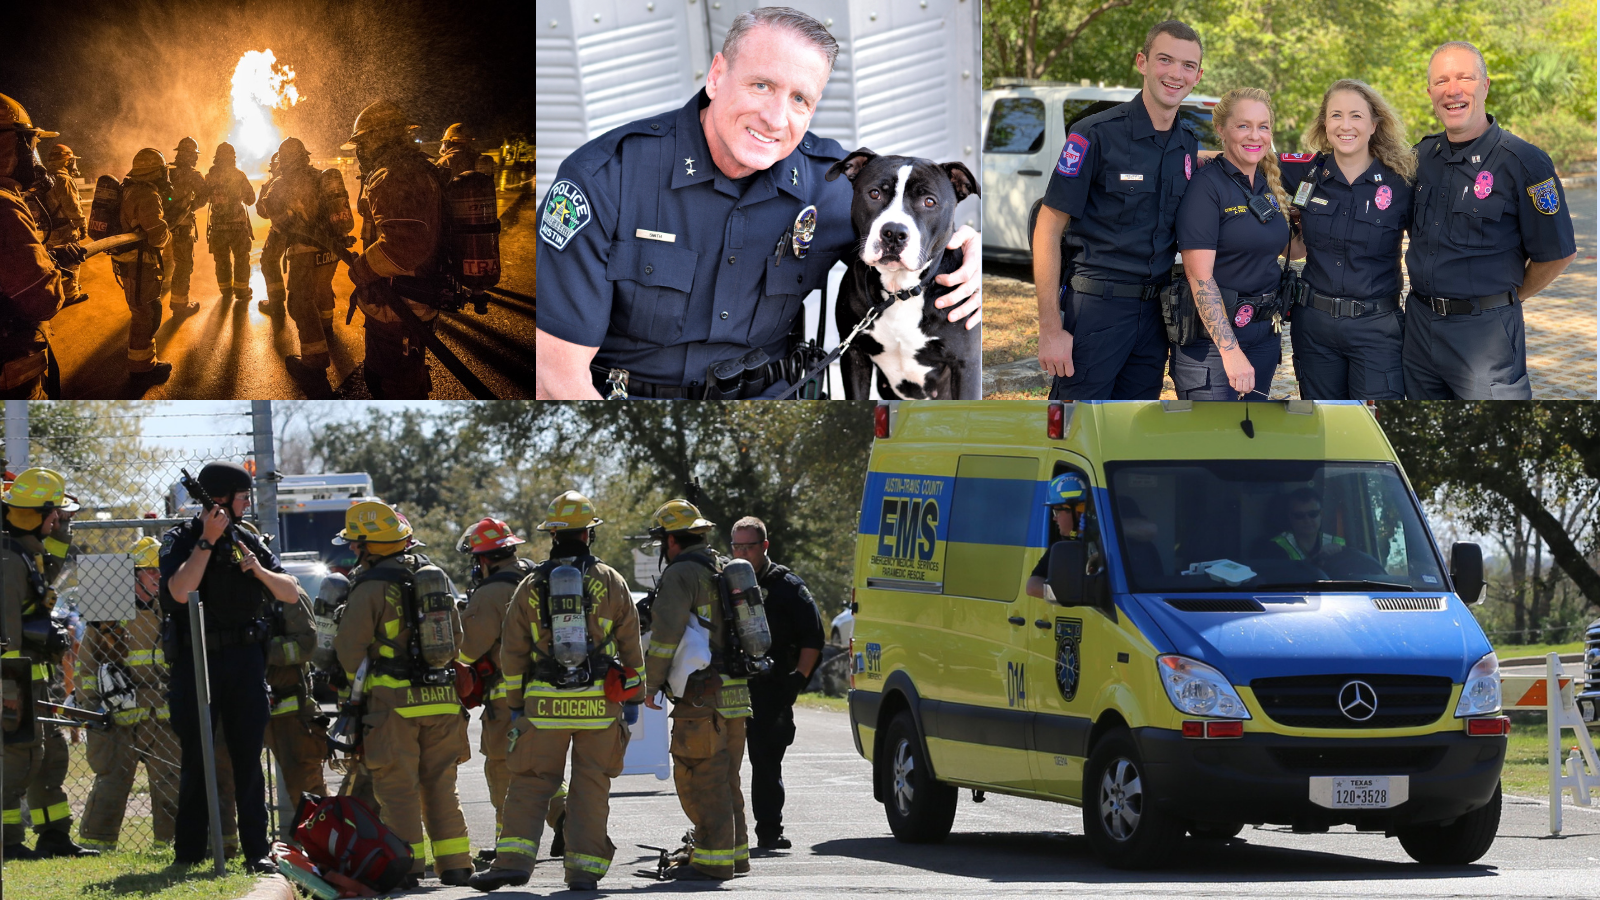 Image of multiple City of Austin public safety employees.